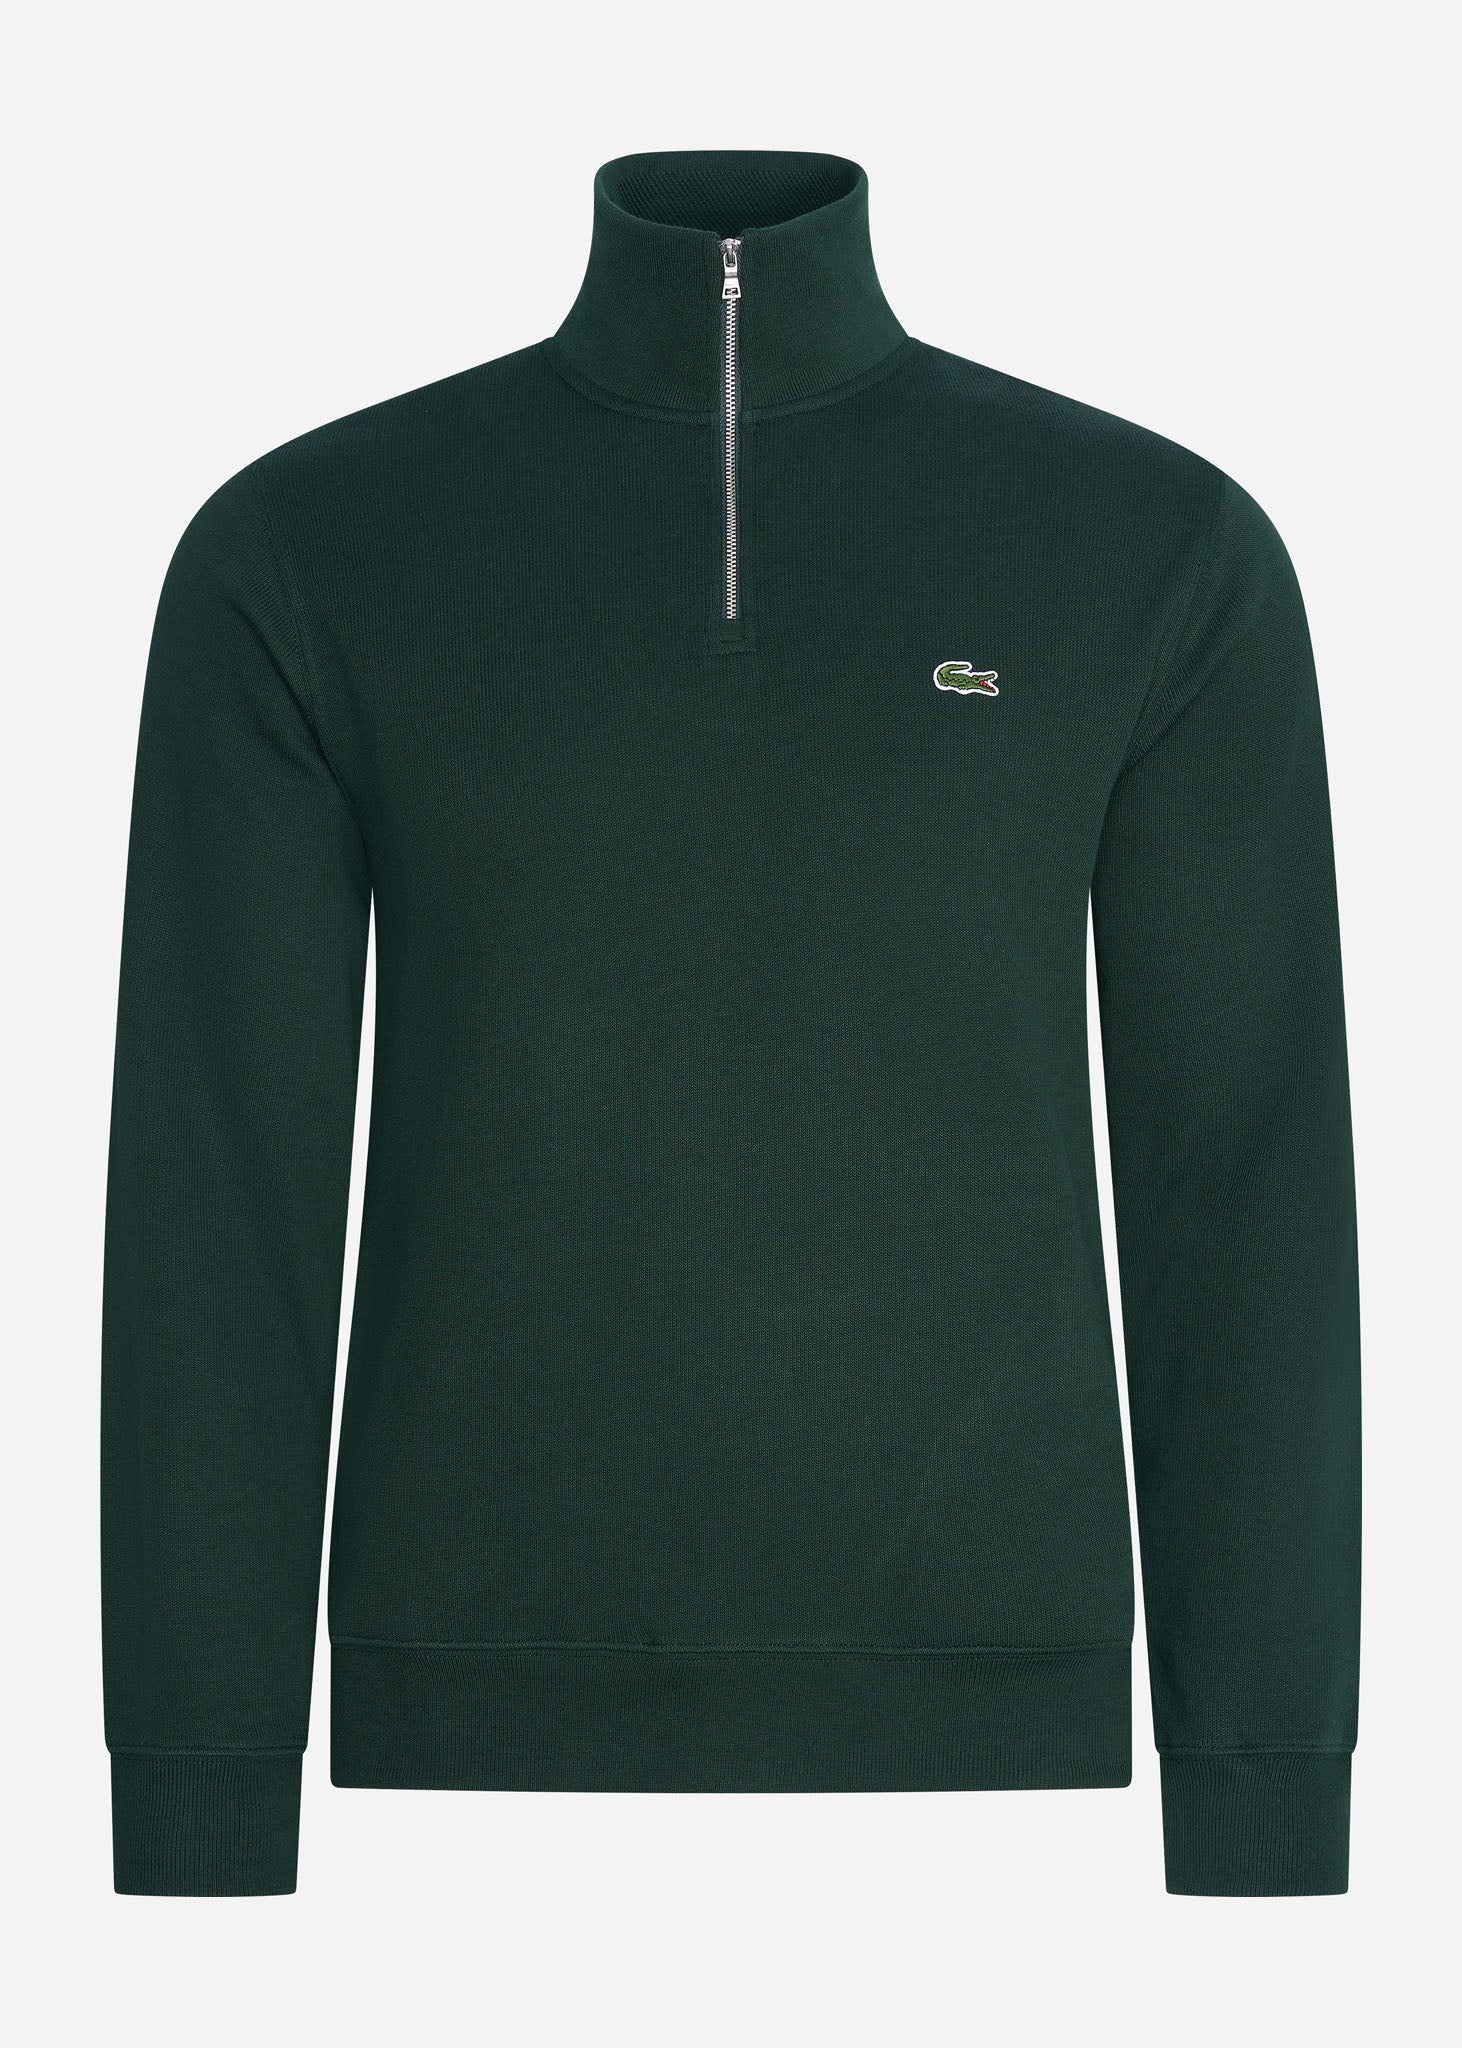 Lacoste half zip sweater sinople green